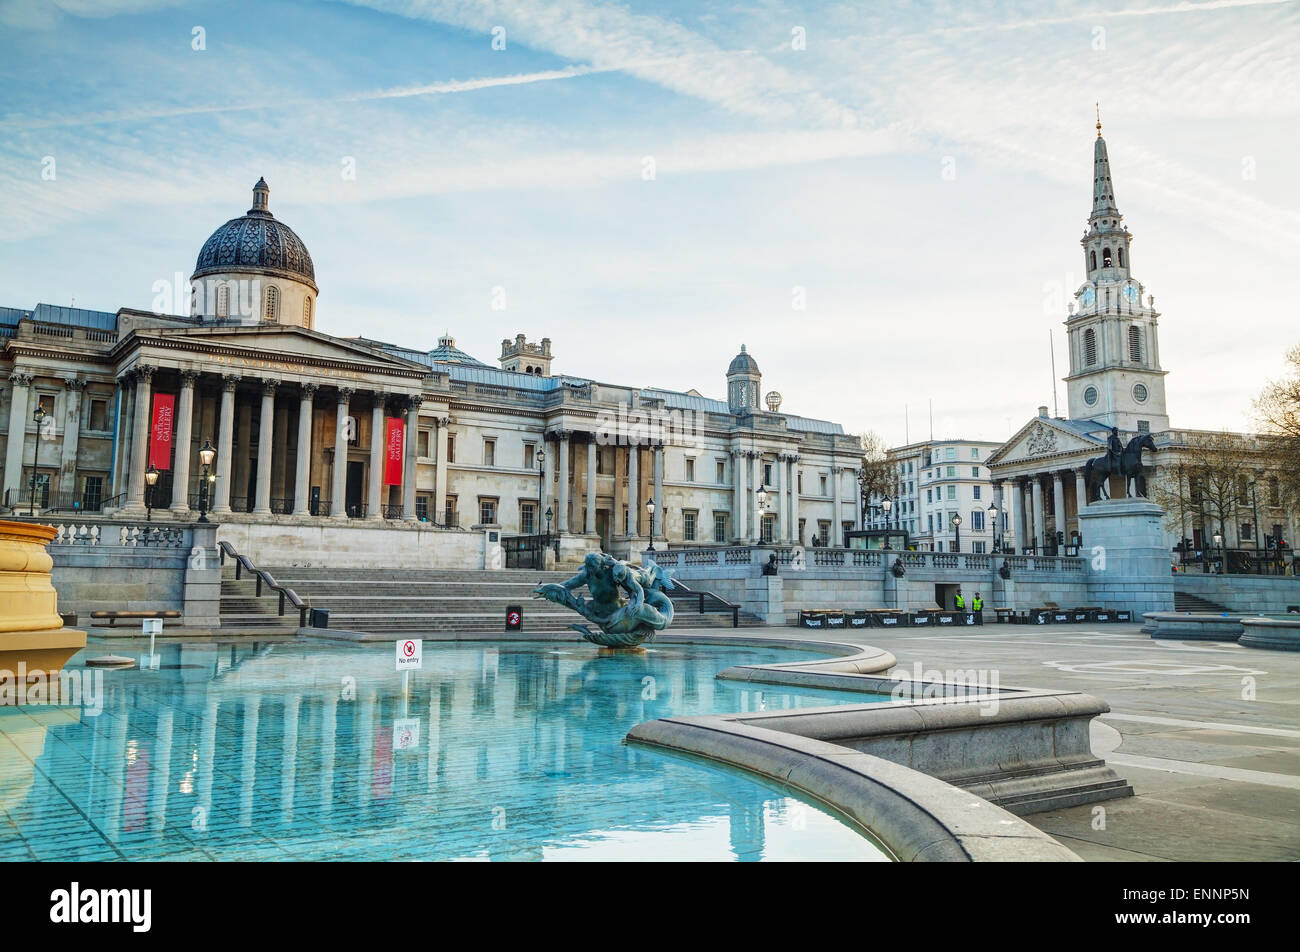 LONDON - APRIL 12: Nationalgalerie Gebäude am Trafalgar Square am 12. April 2015 in London, Vereinigtes Königreich. 1824 gegründet. Stockfoto